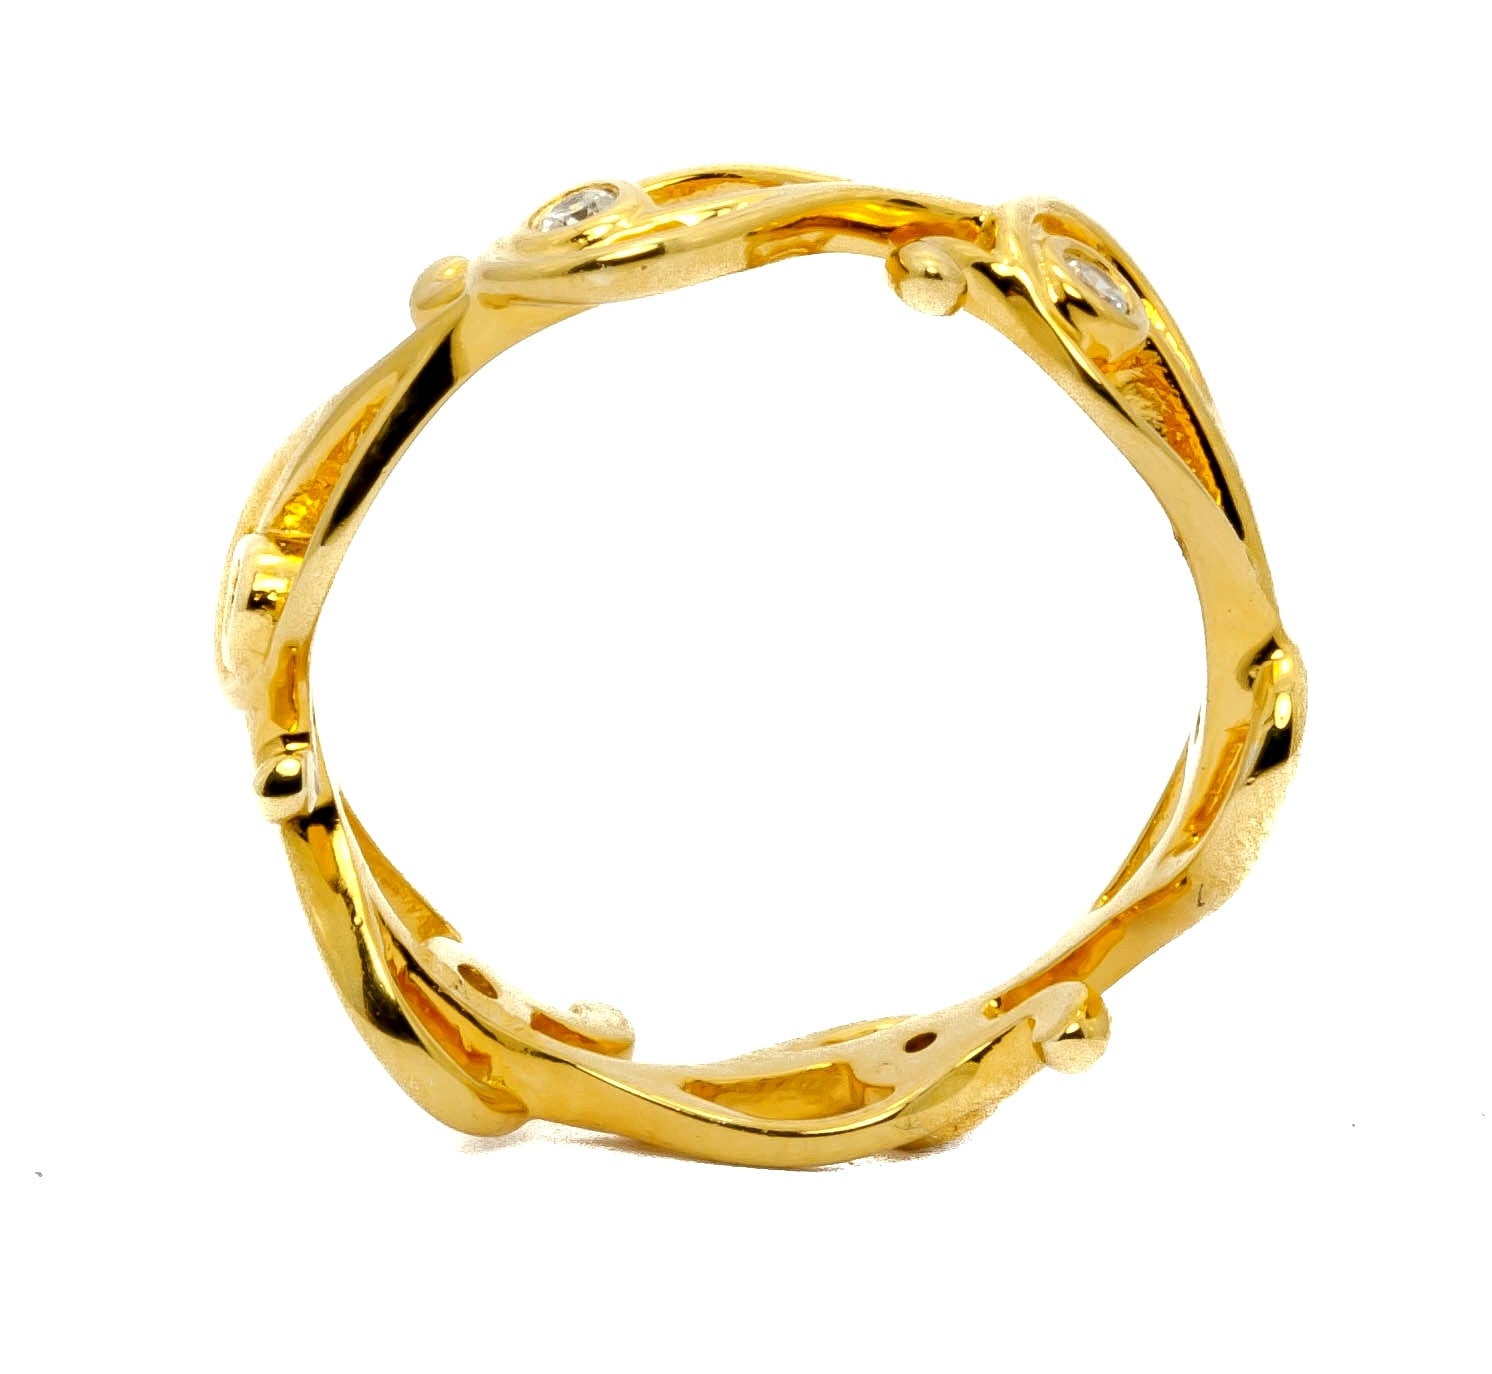 Unique Design, Diamond Wedding Band,14k Rose Gold, White Gold,Yellow Gold. 14 Carats Diamonds - Y5014/650